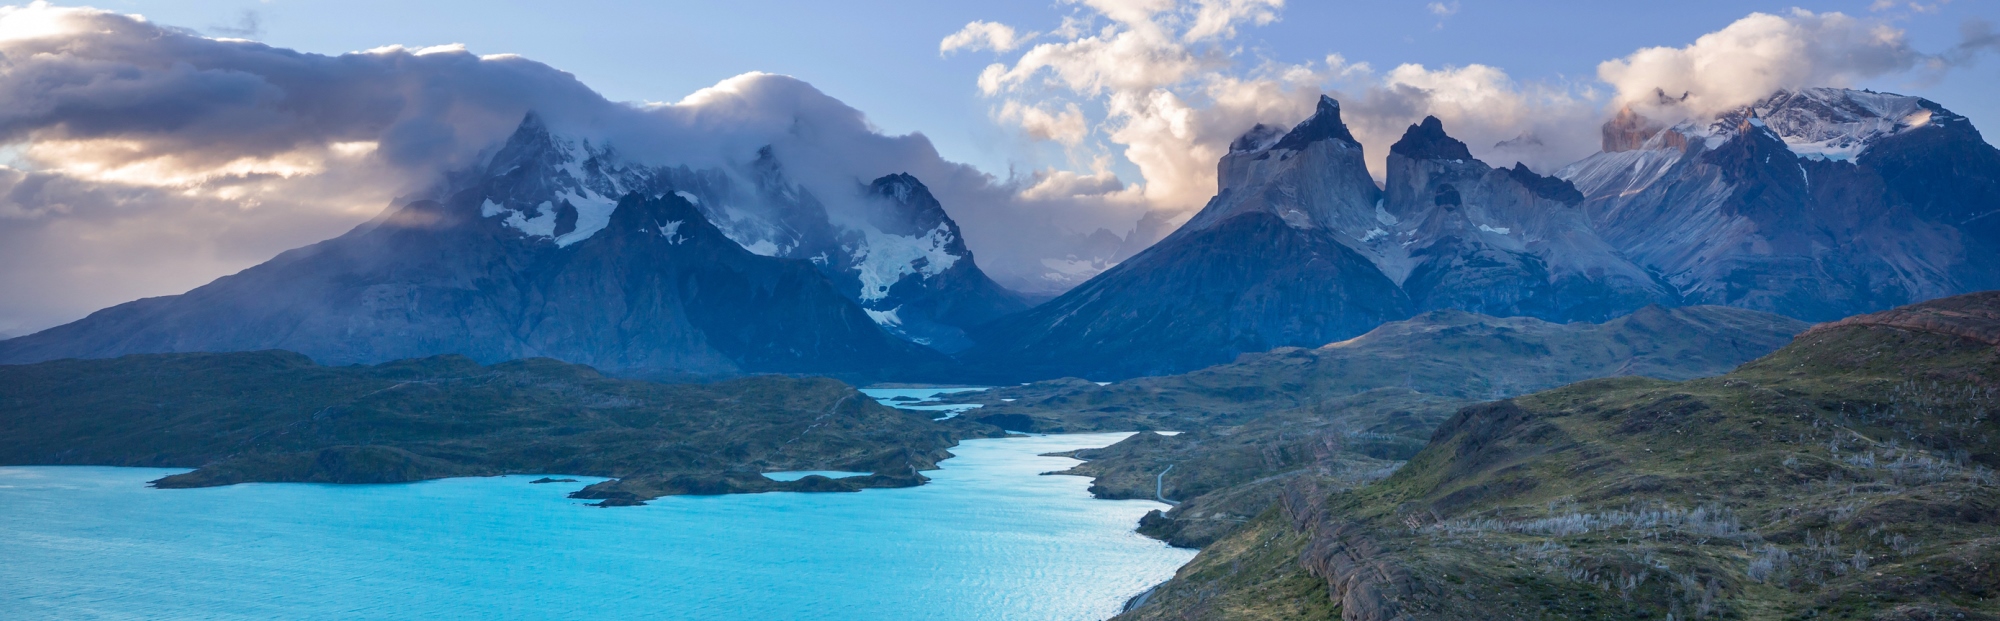 Chile, lagos y Patagonia